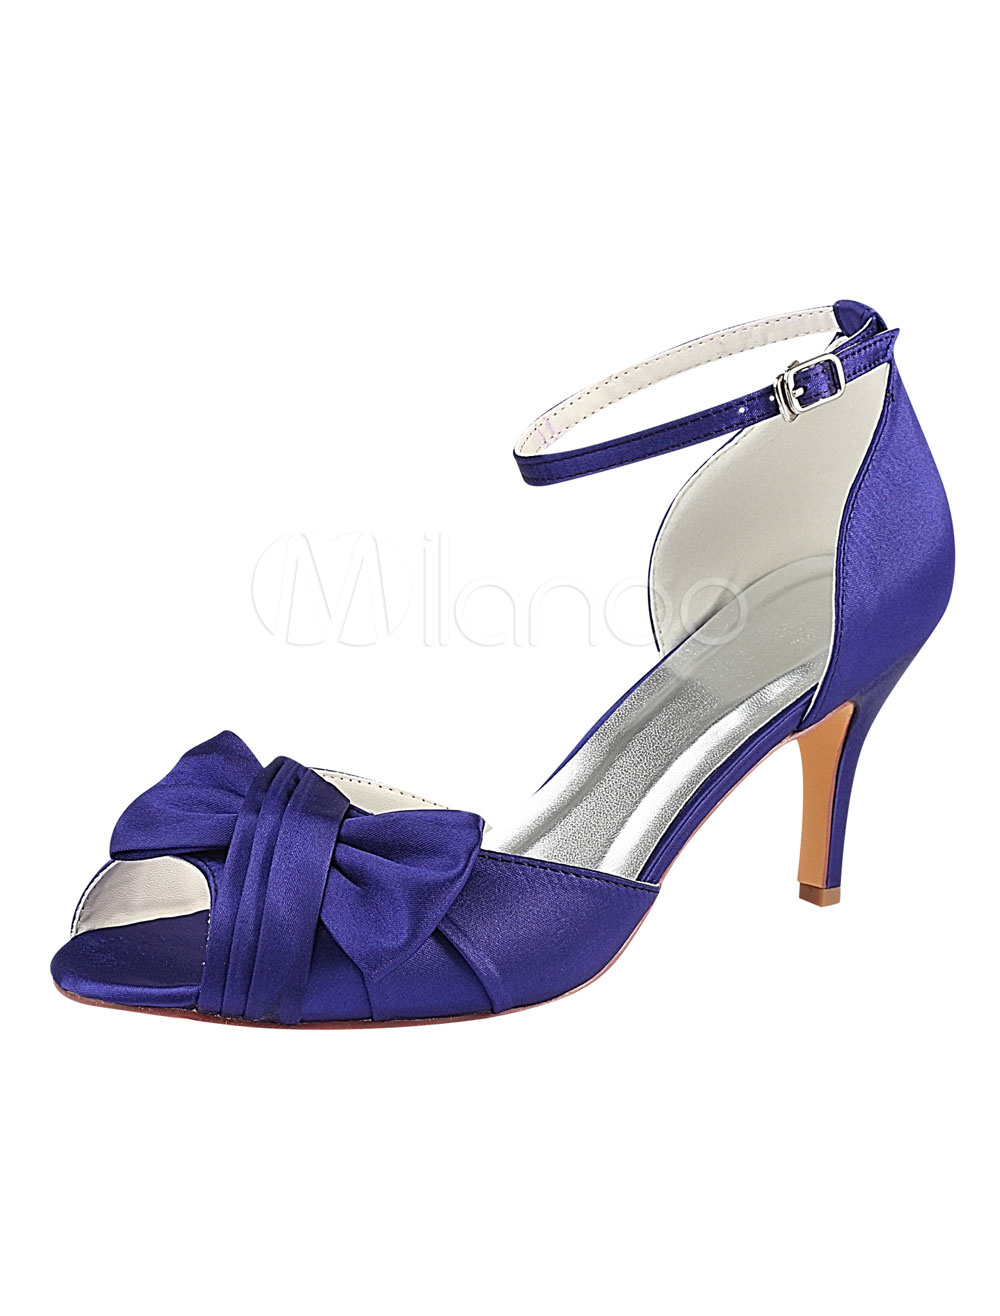 royal purple wedding shoes